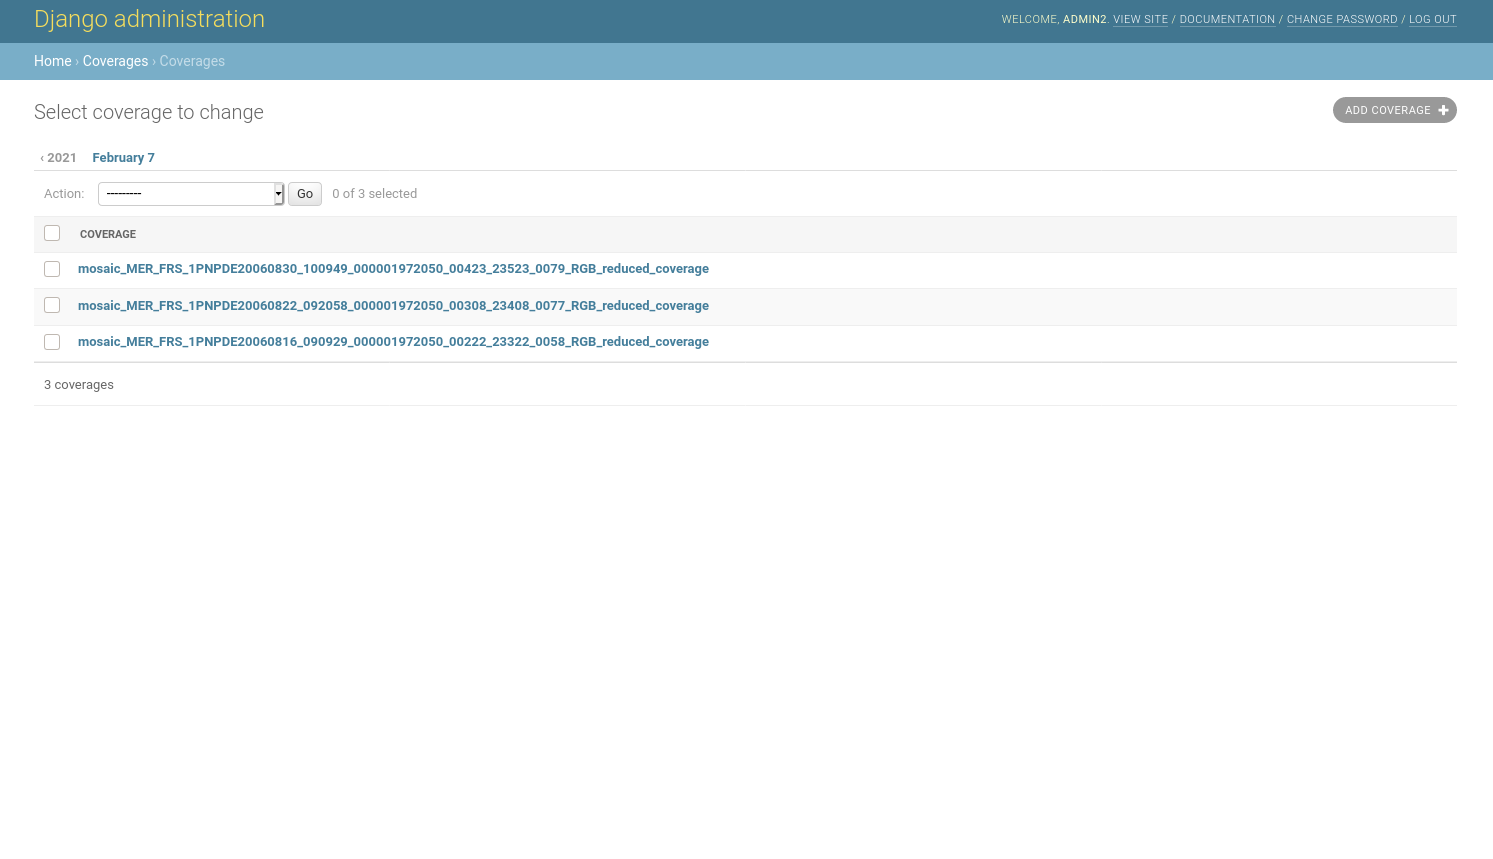 EOxServer demonstration admin client Dataset Series Management